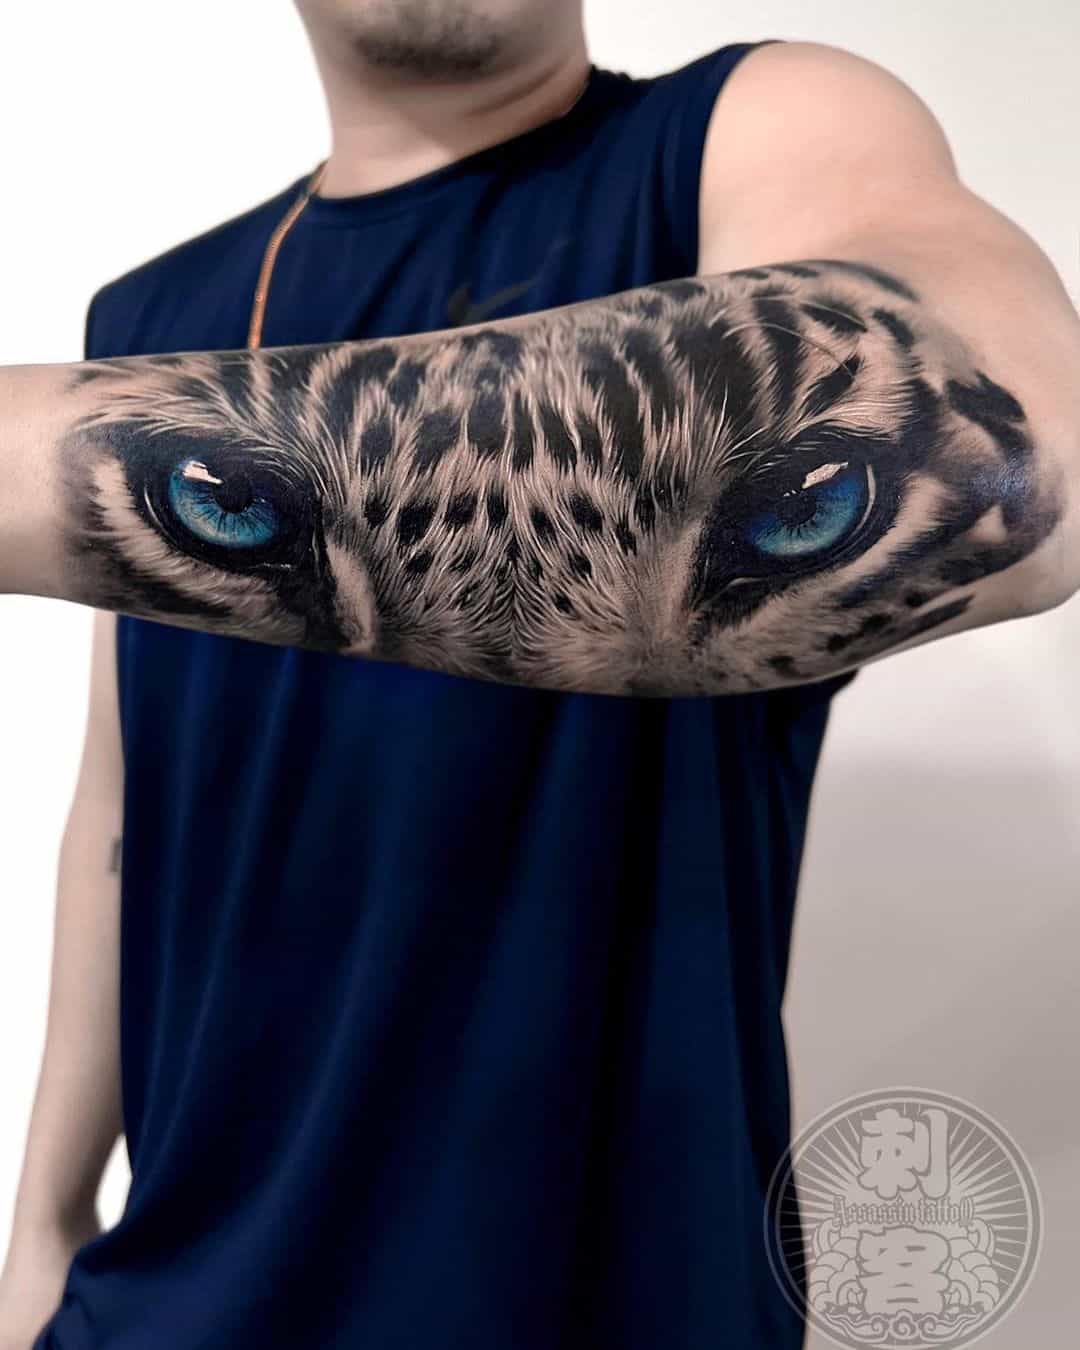 Leopard eye tattoo design on arm sleevs by sean assian tattoo